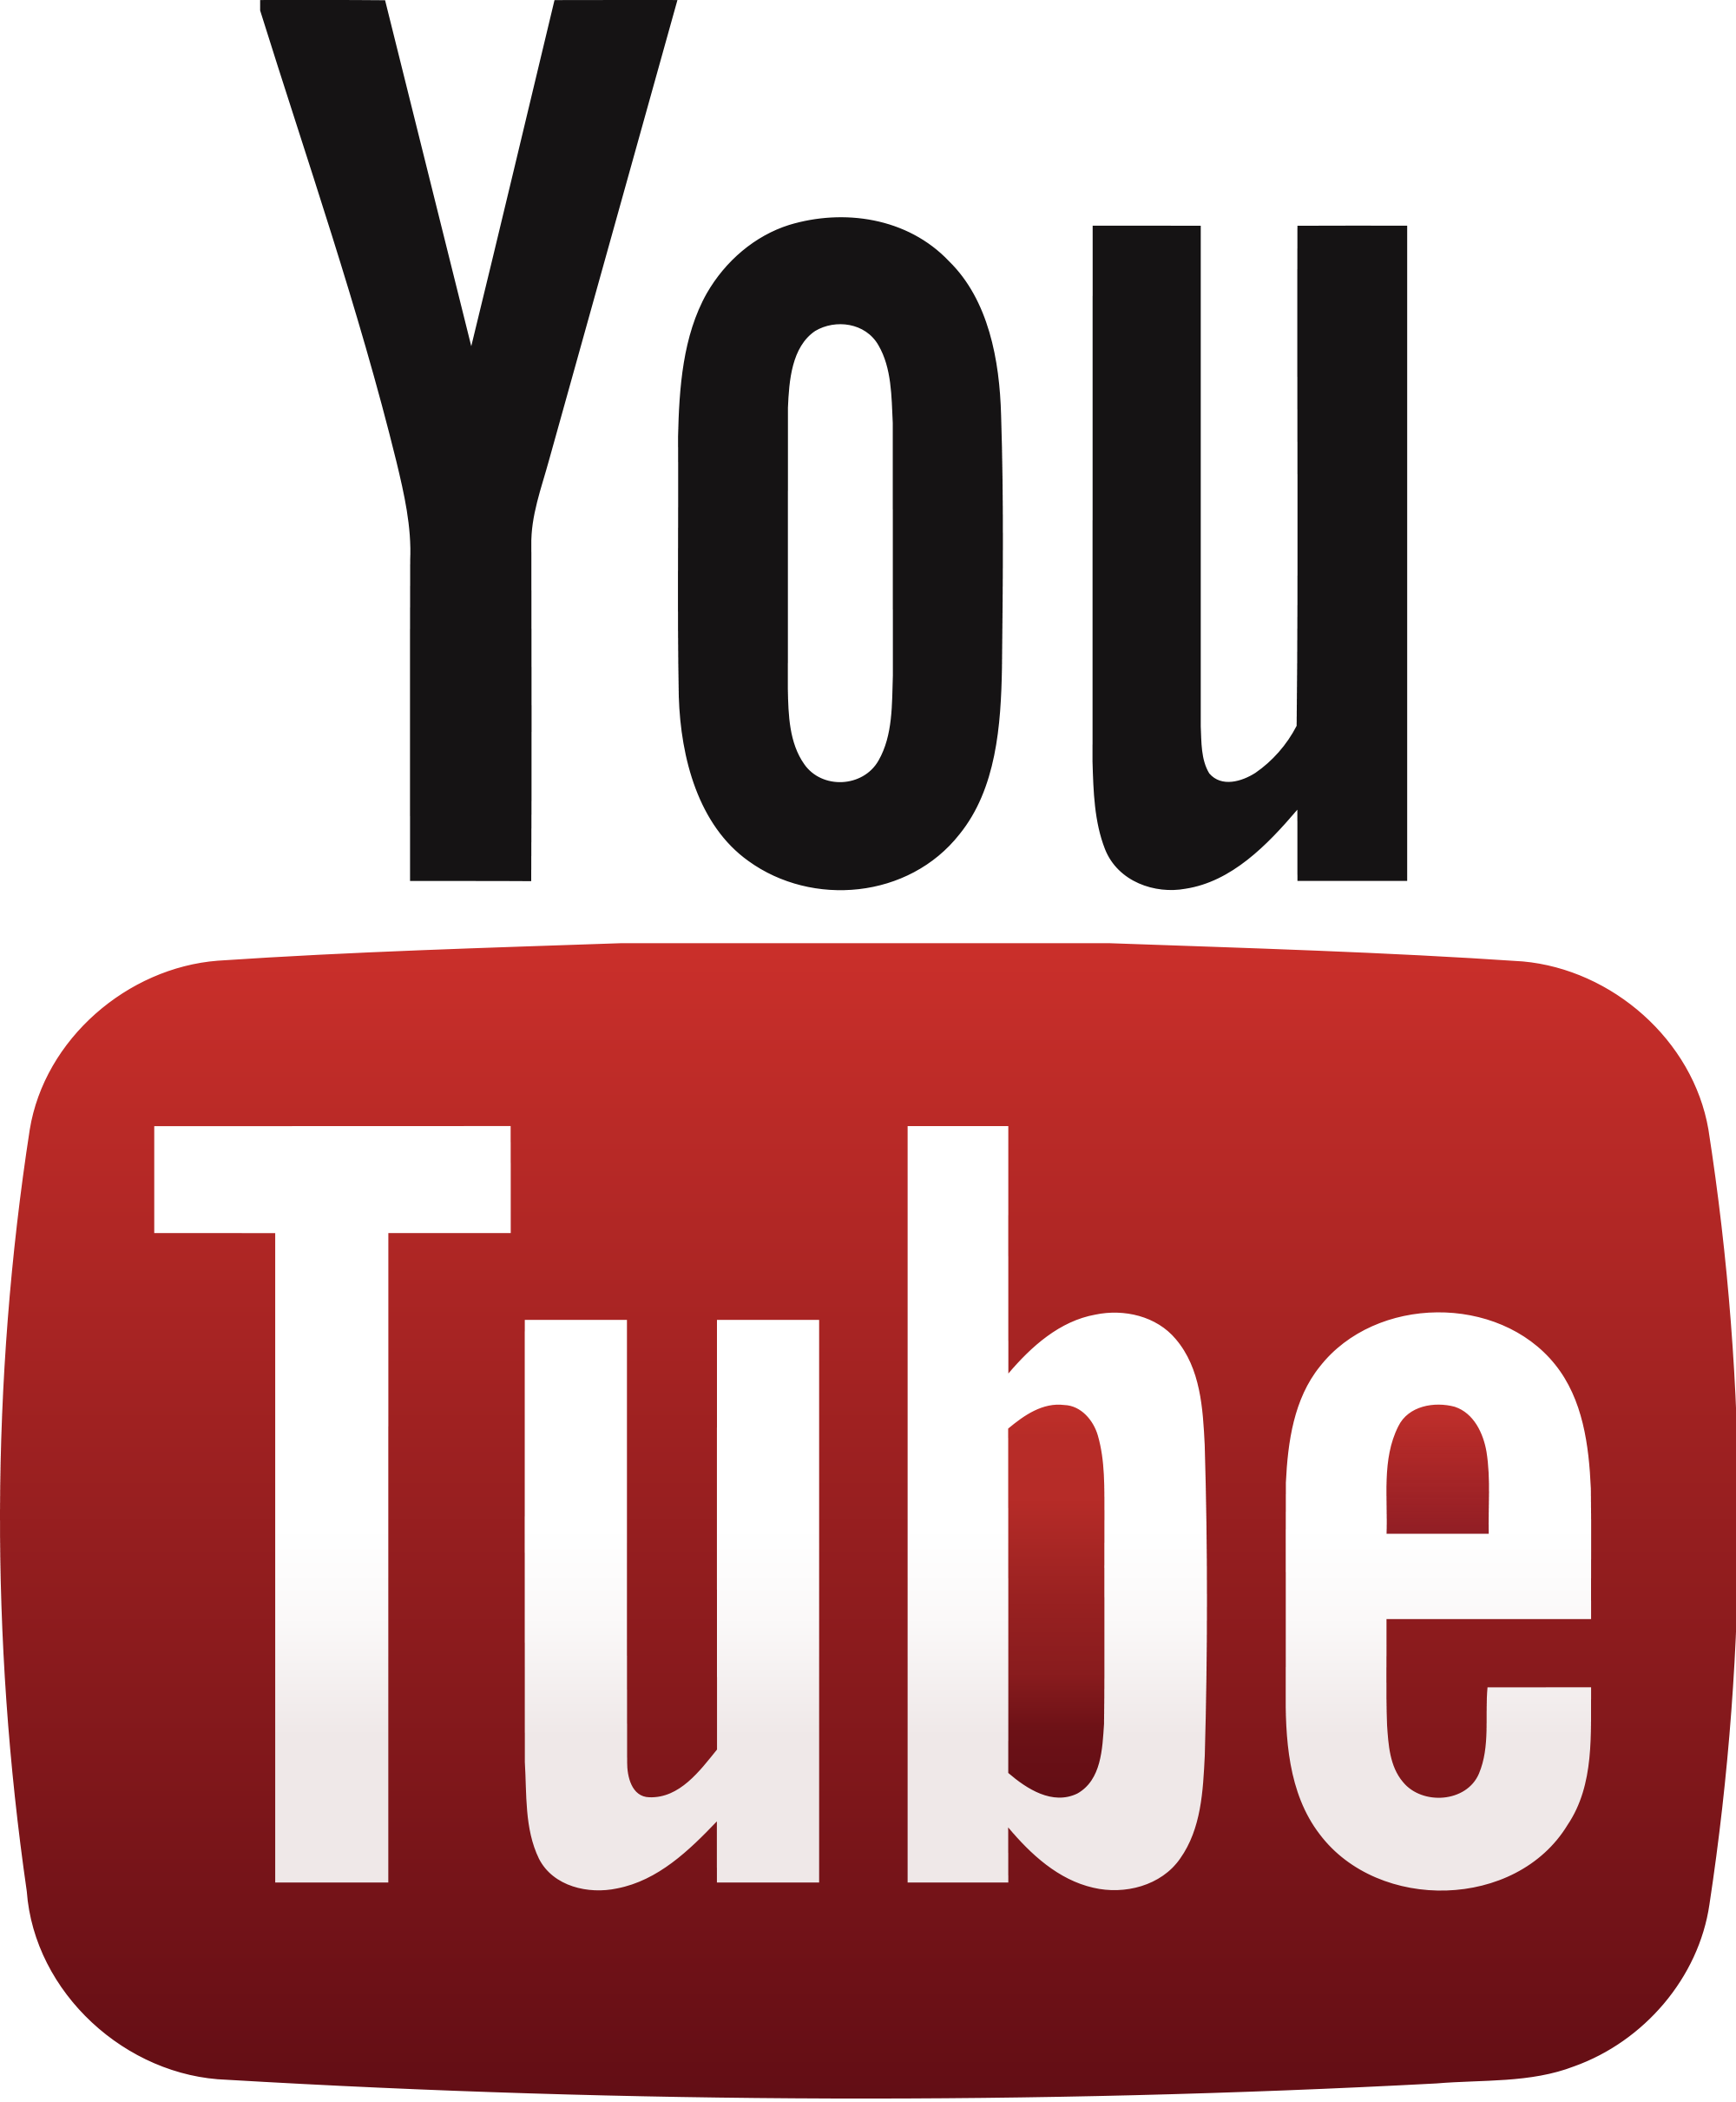 V youtube. Ютуб лого. Логотип youtube PNG. Йтуп. ЕТАБ.